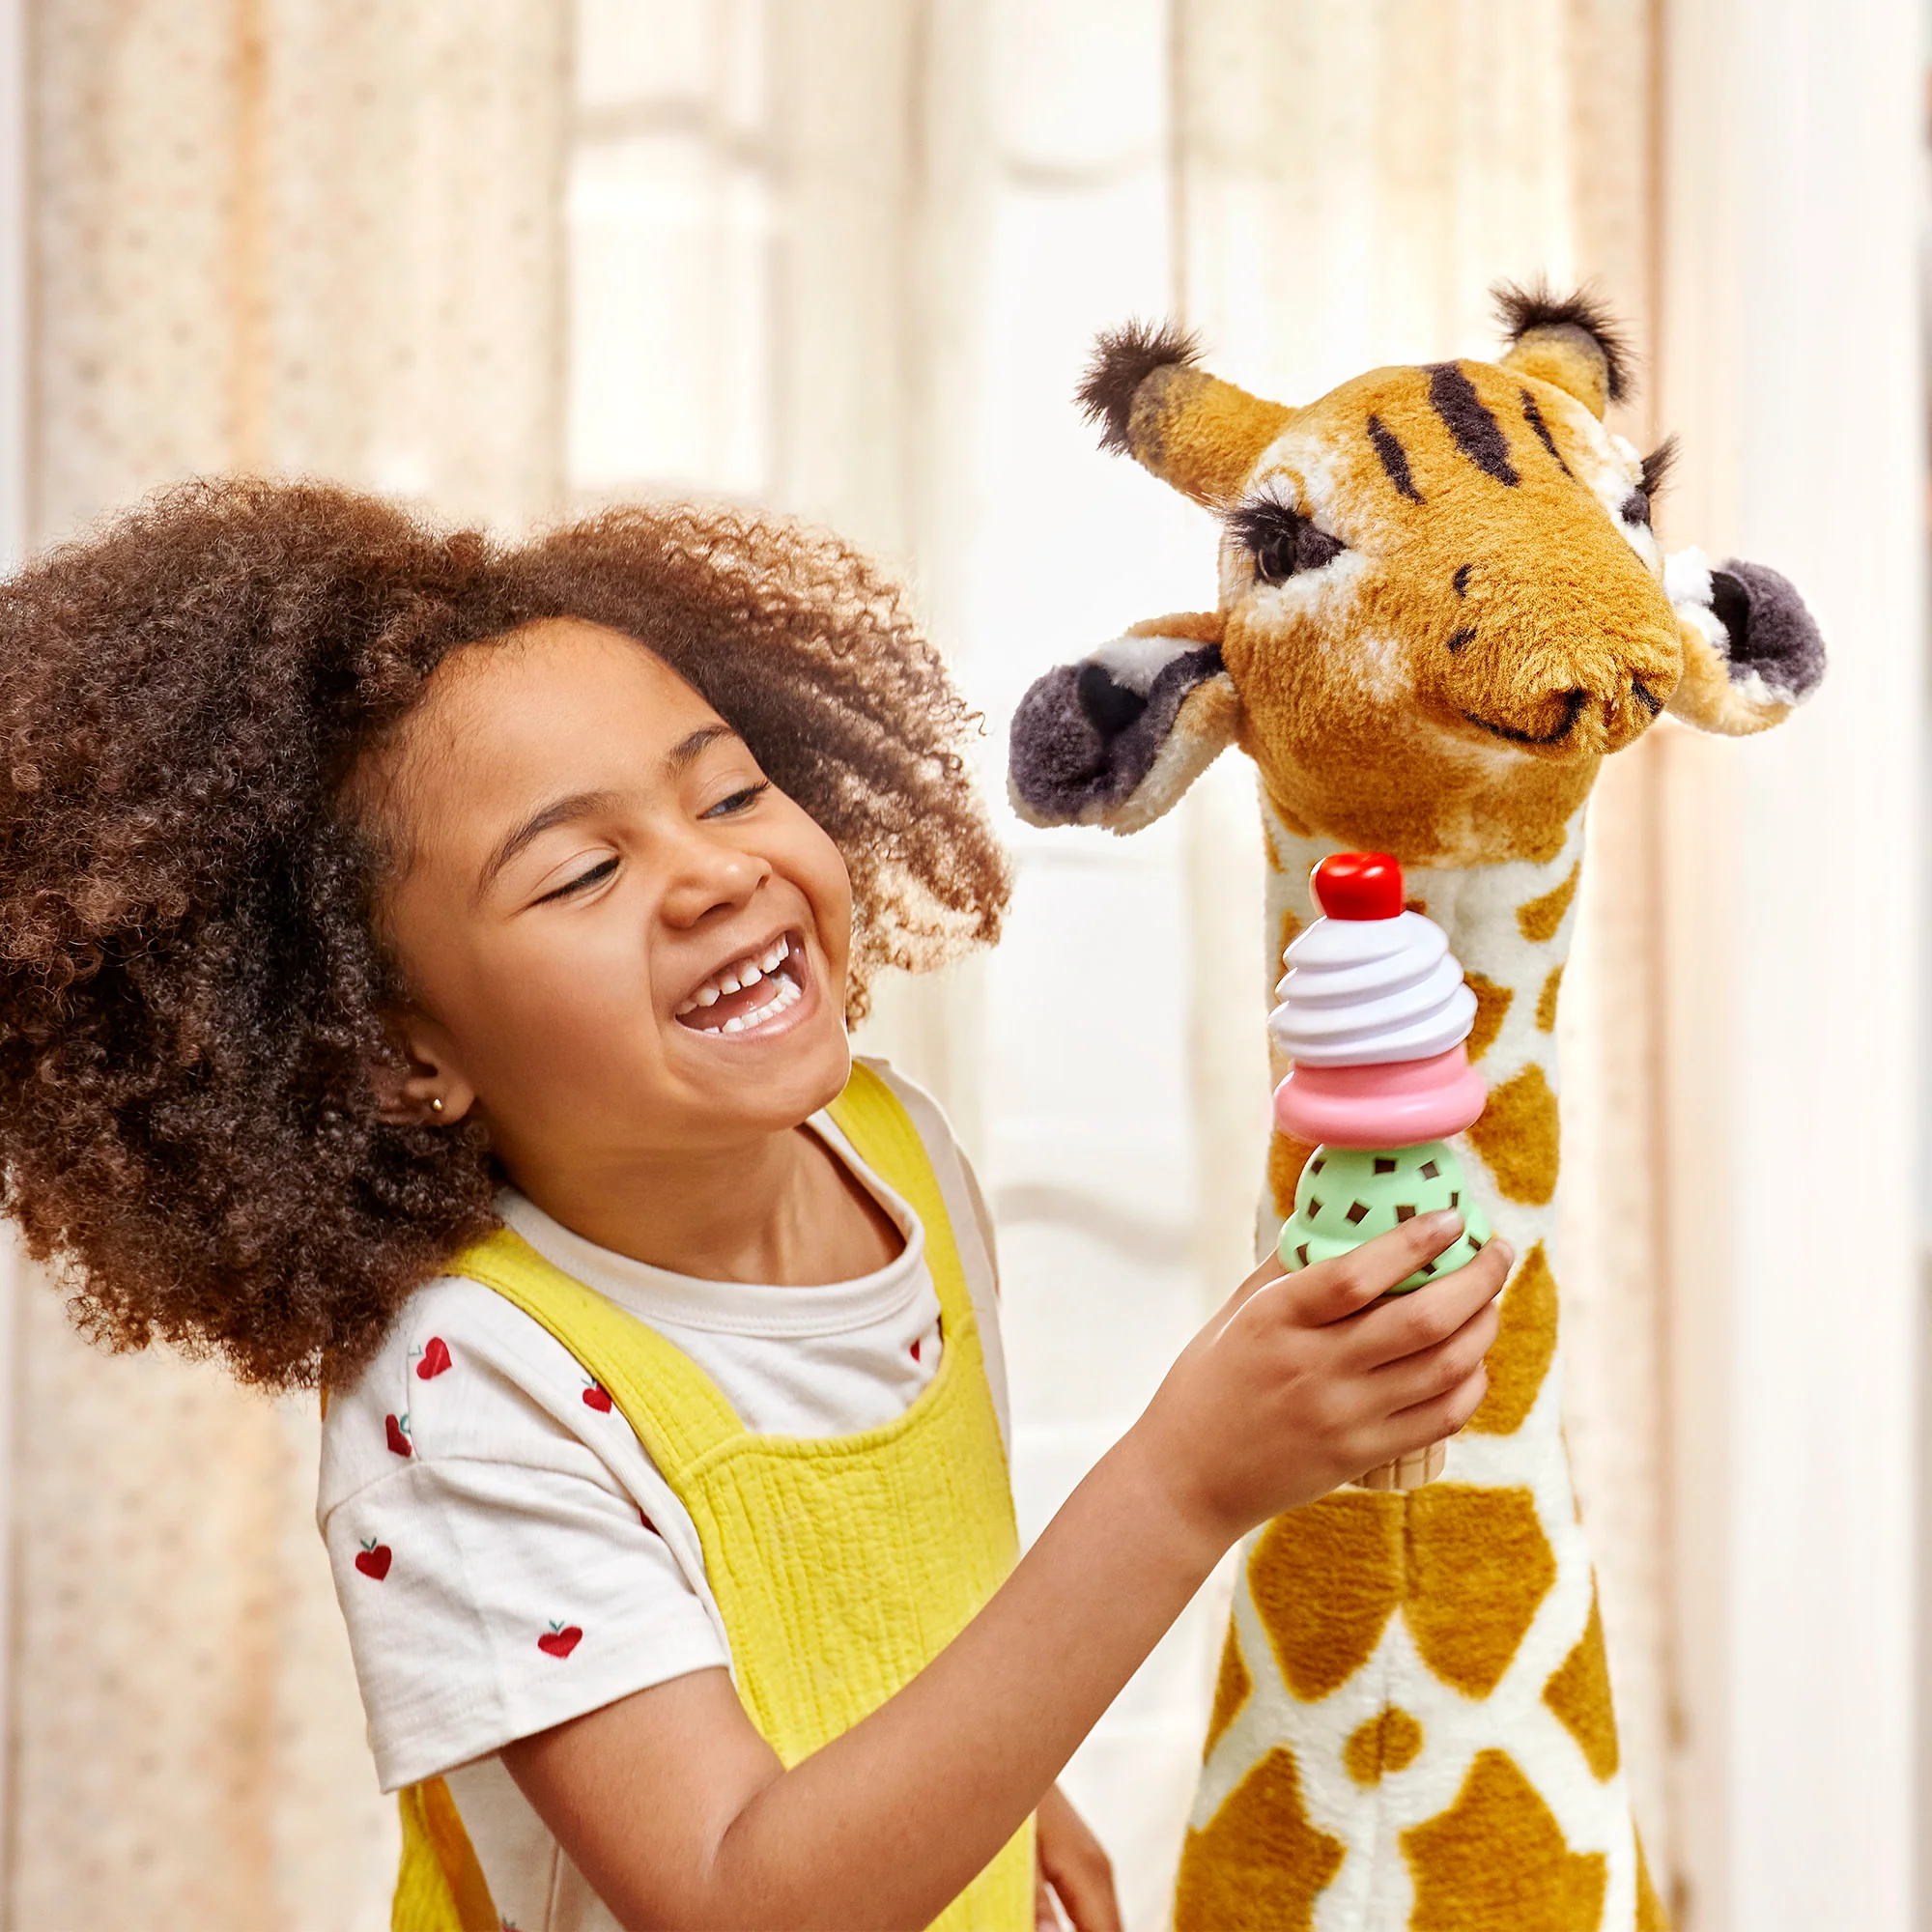 Child playing with stuffed animal